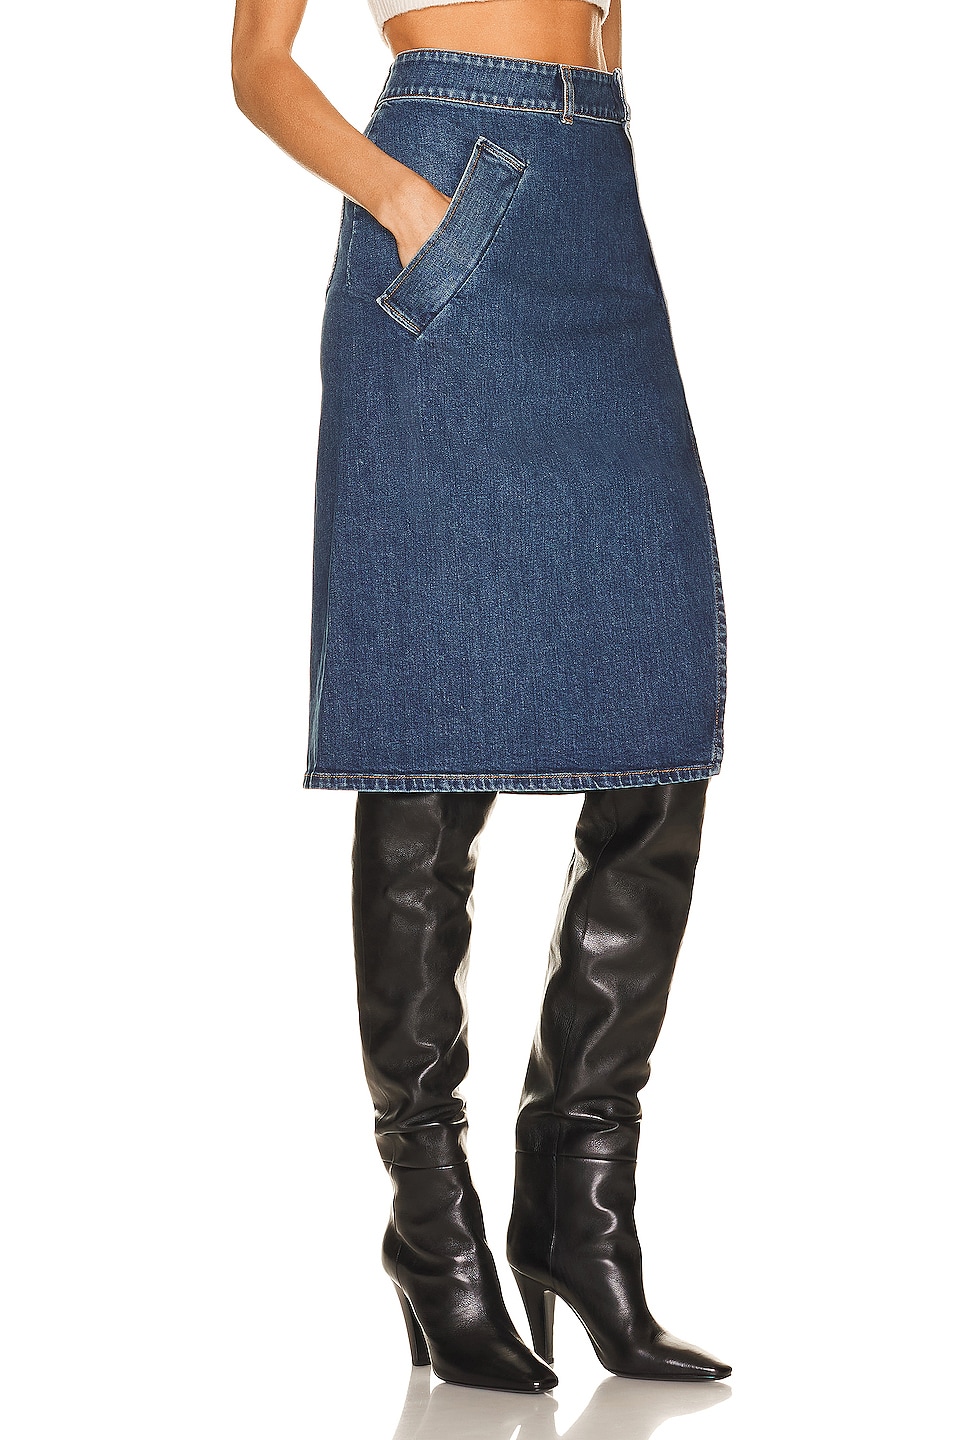 Stella McCartney Vintage Wrap Denim Midi Skirt in Vintage Dark Blue | FWRD